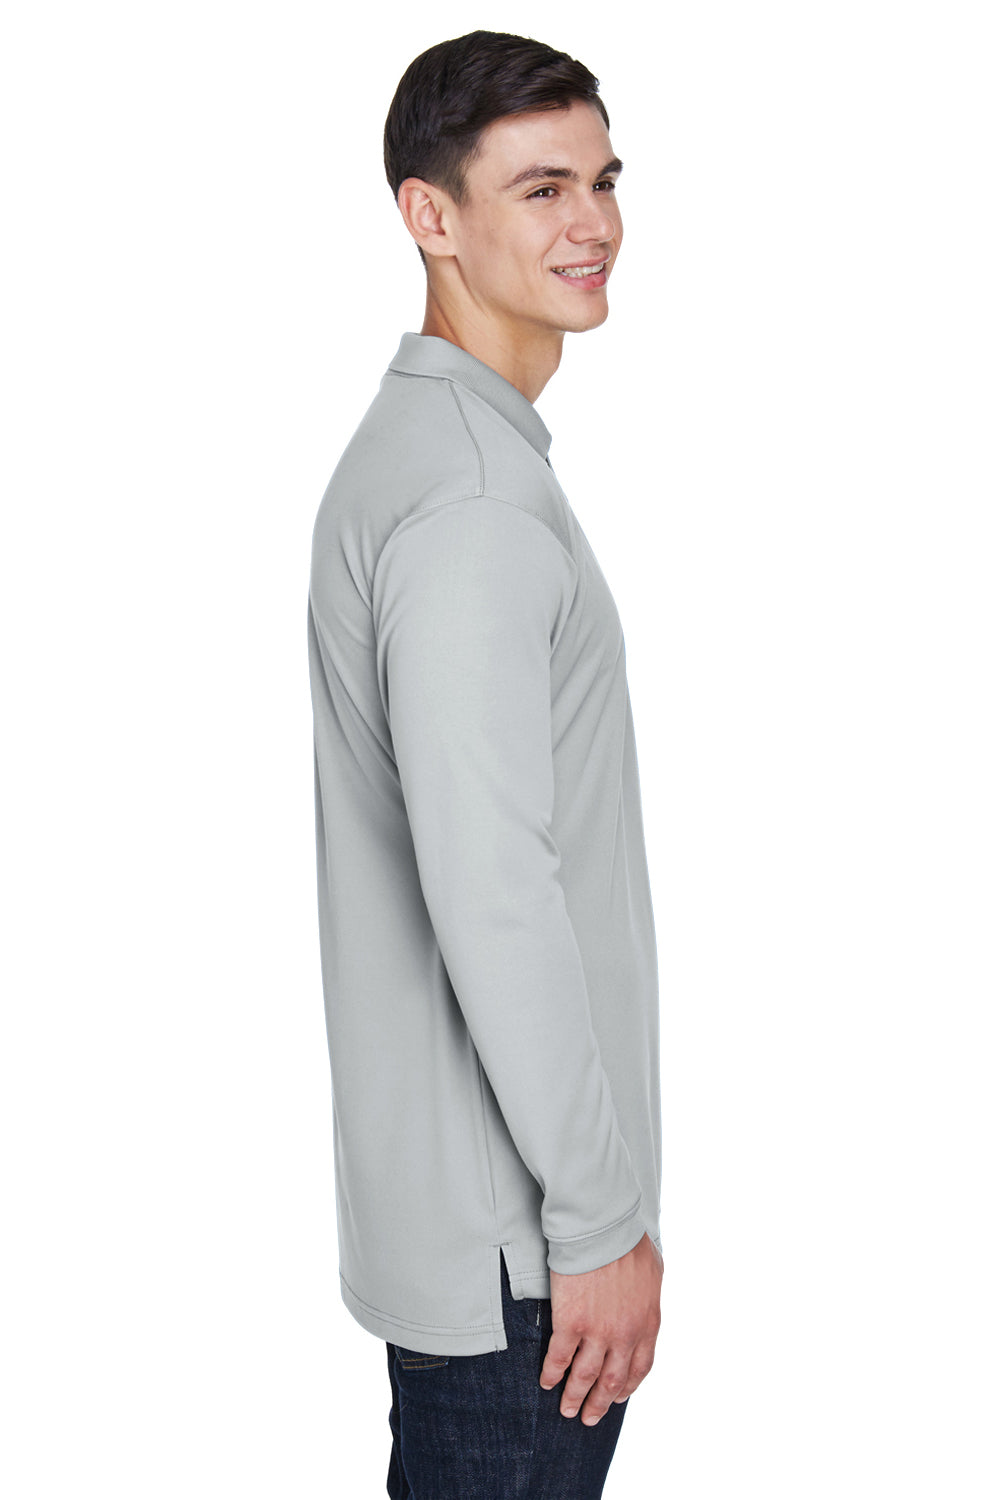 UltraClub 8405LS Mens Cool & Dry Moisture Wicking Long Sleeve Polo Shirt Grey Side